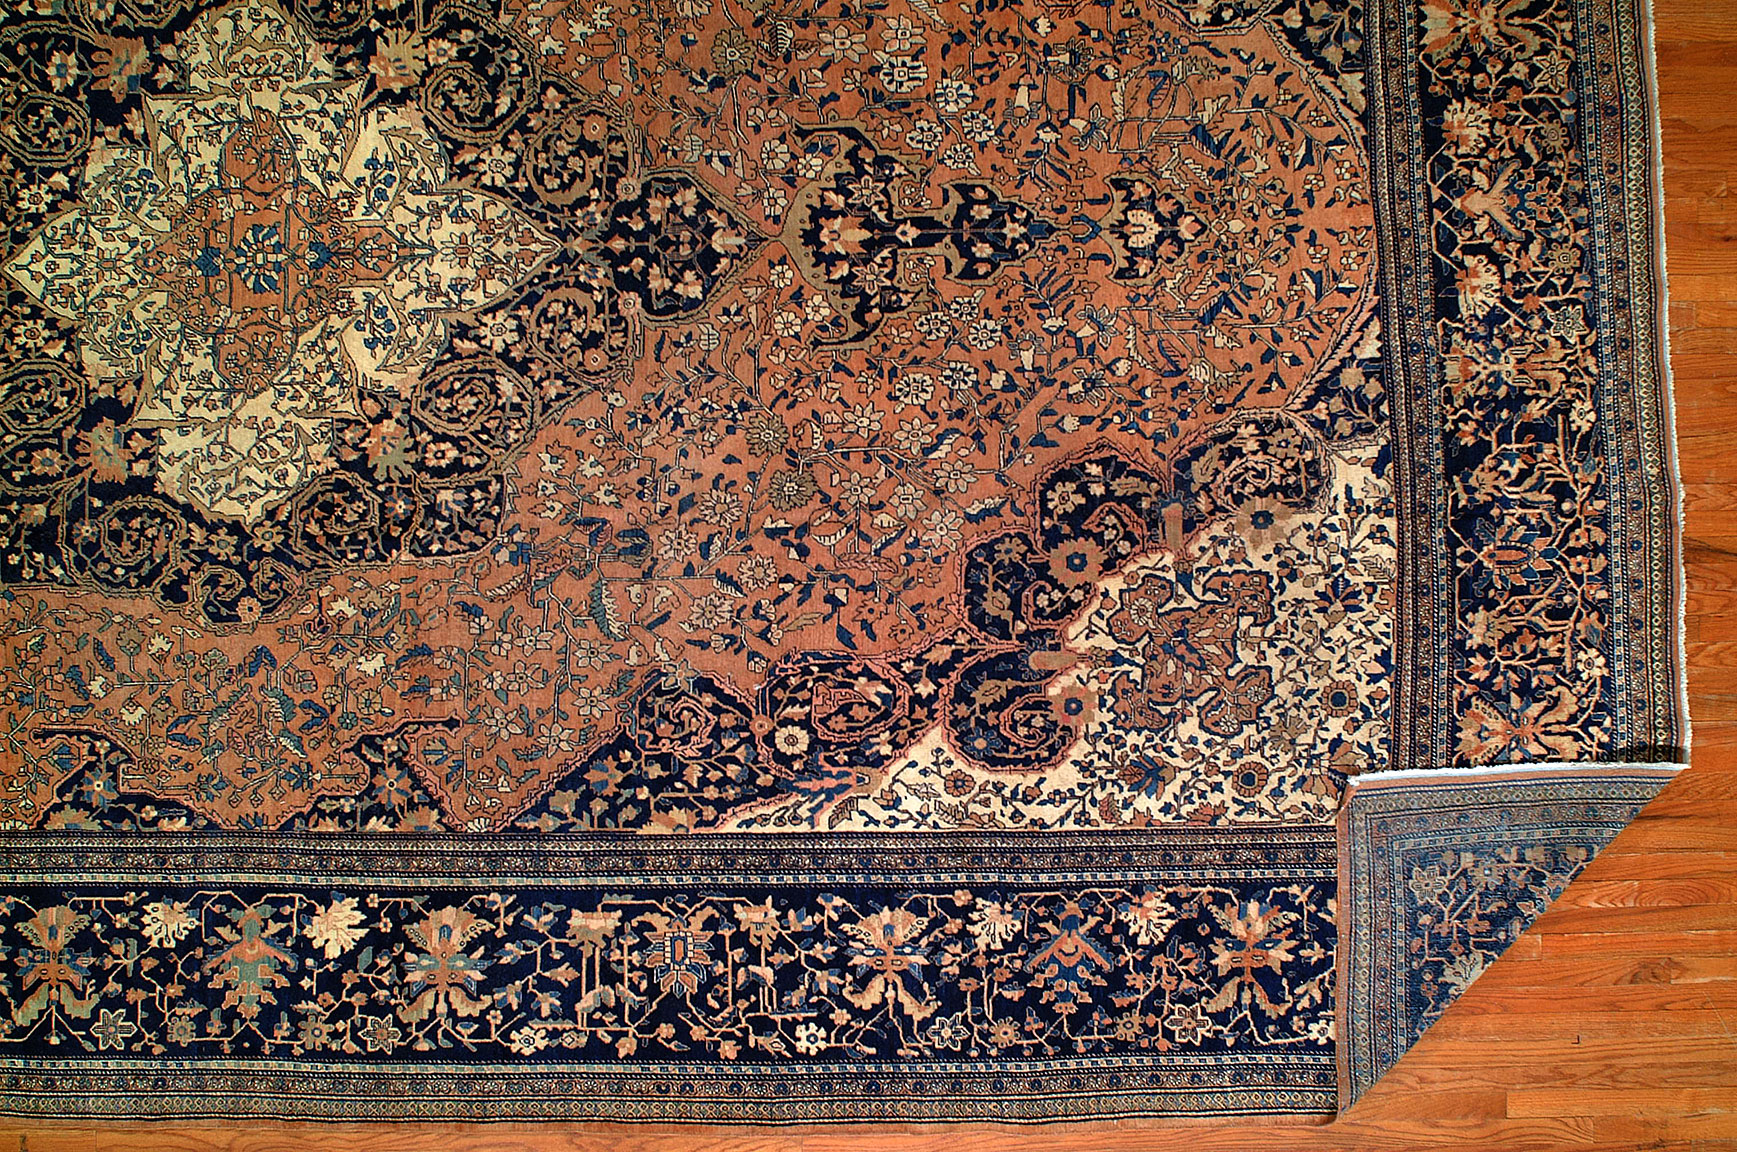 Antique sarouk, fereghan Carpet - # 52138